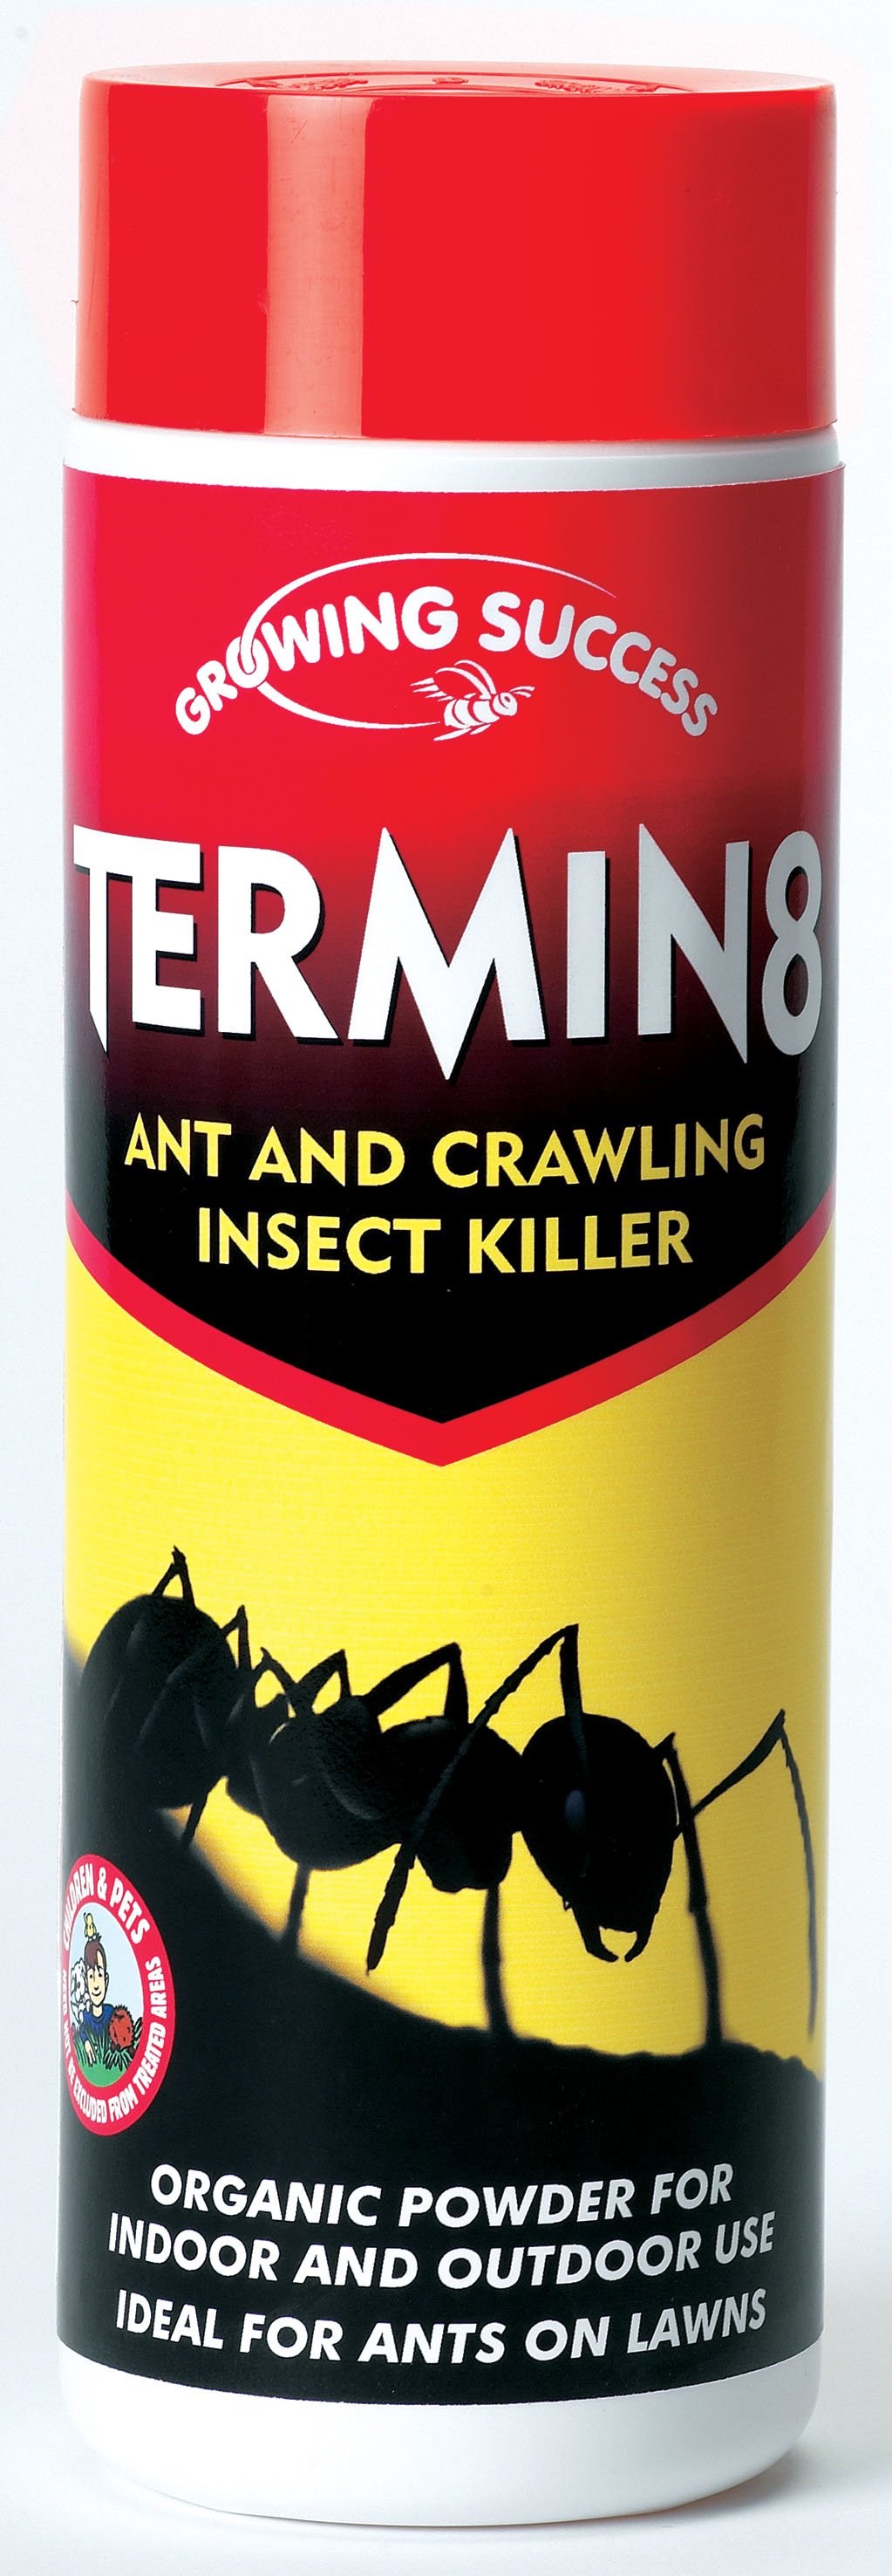 Termin8 Ant Powder